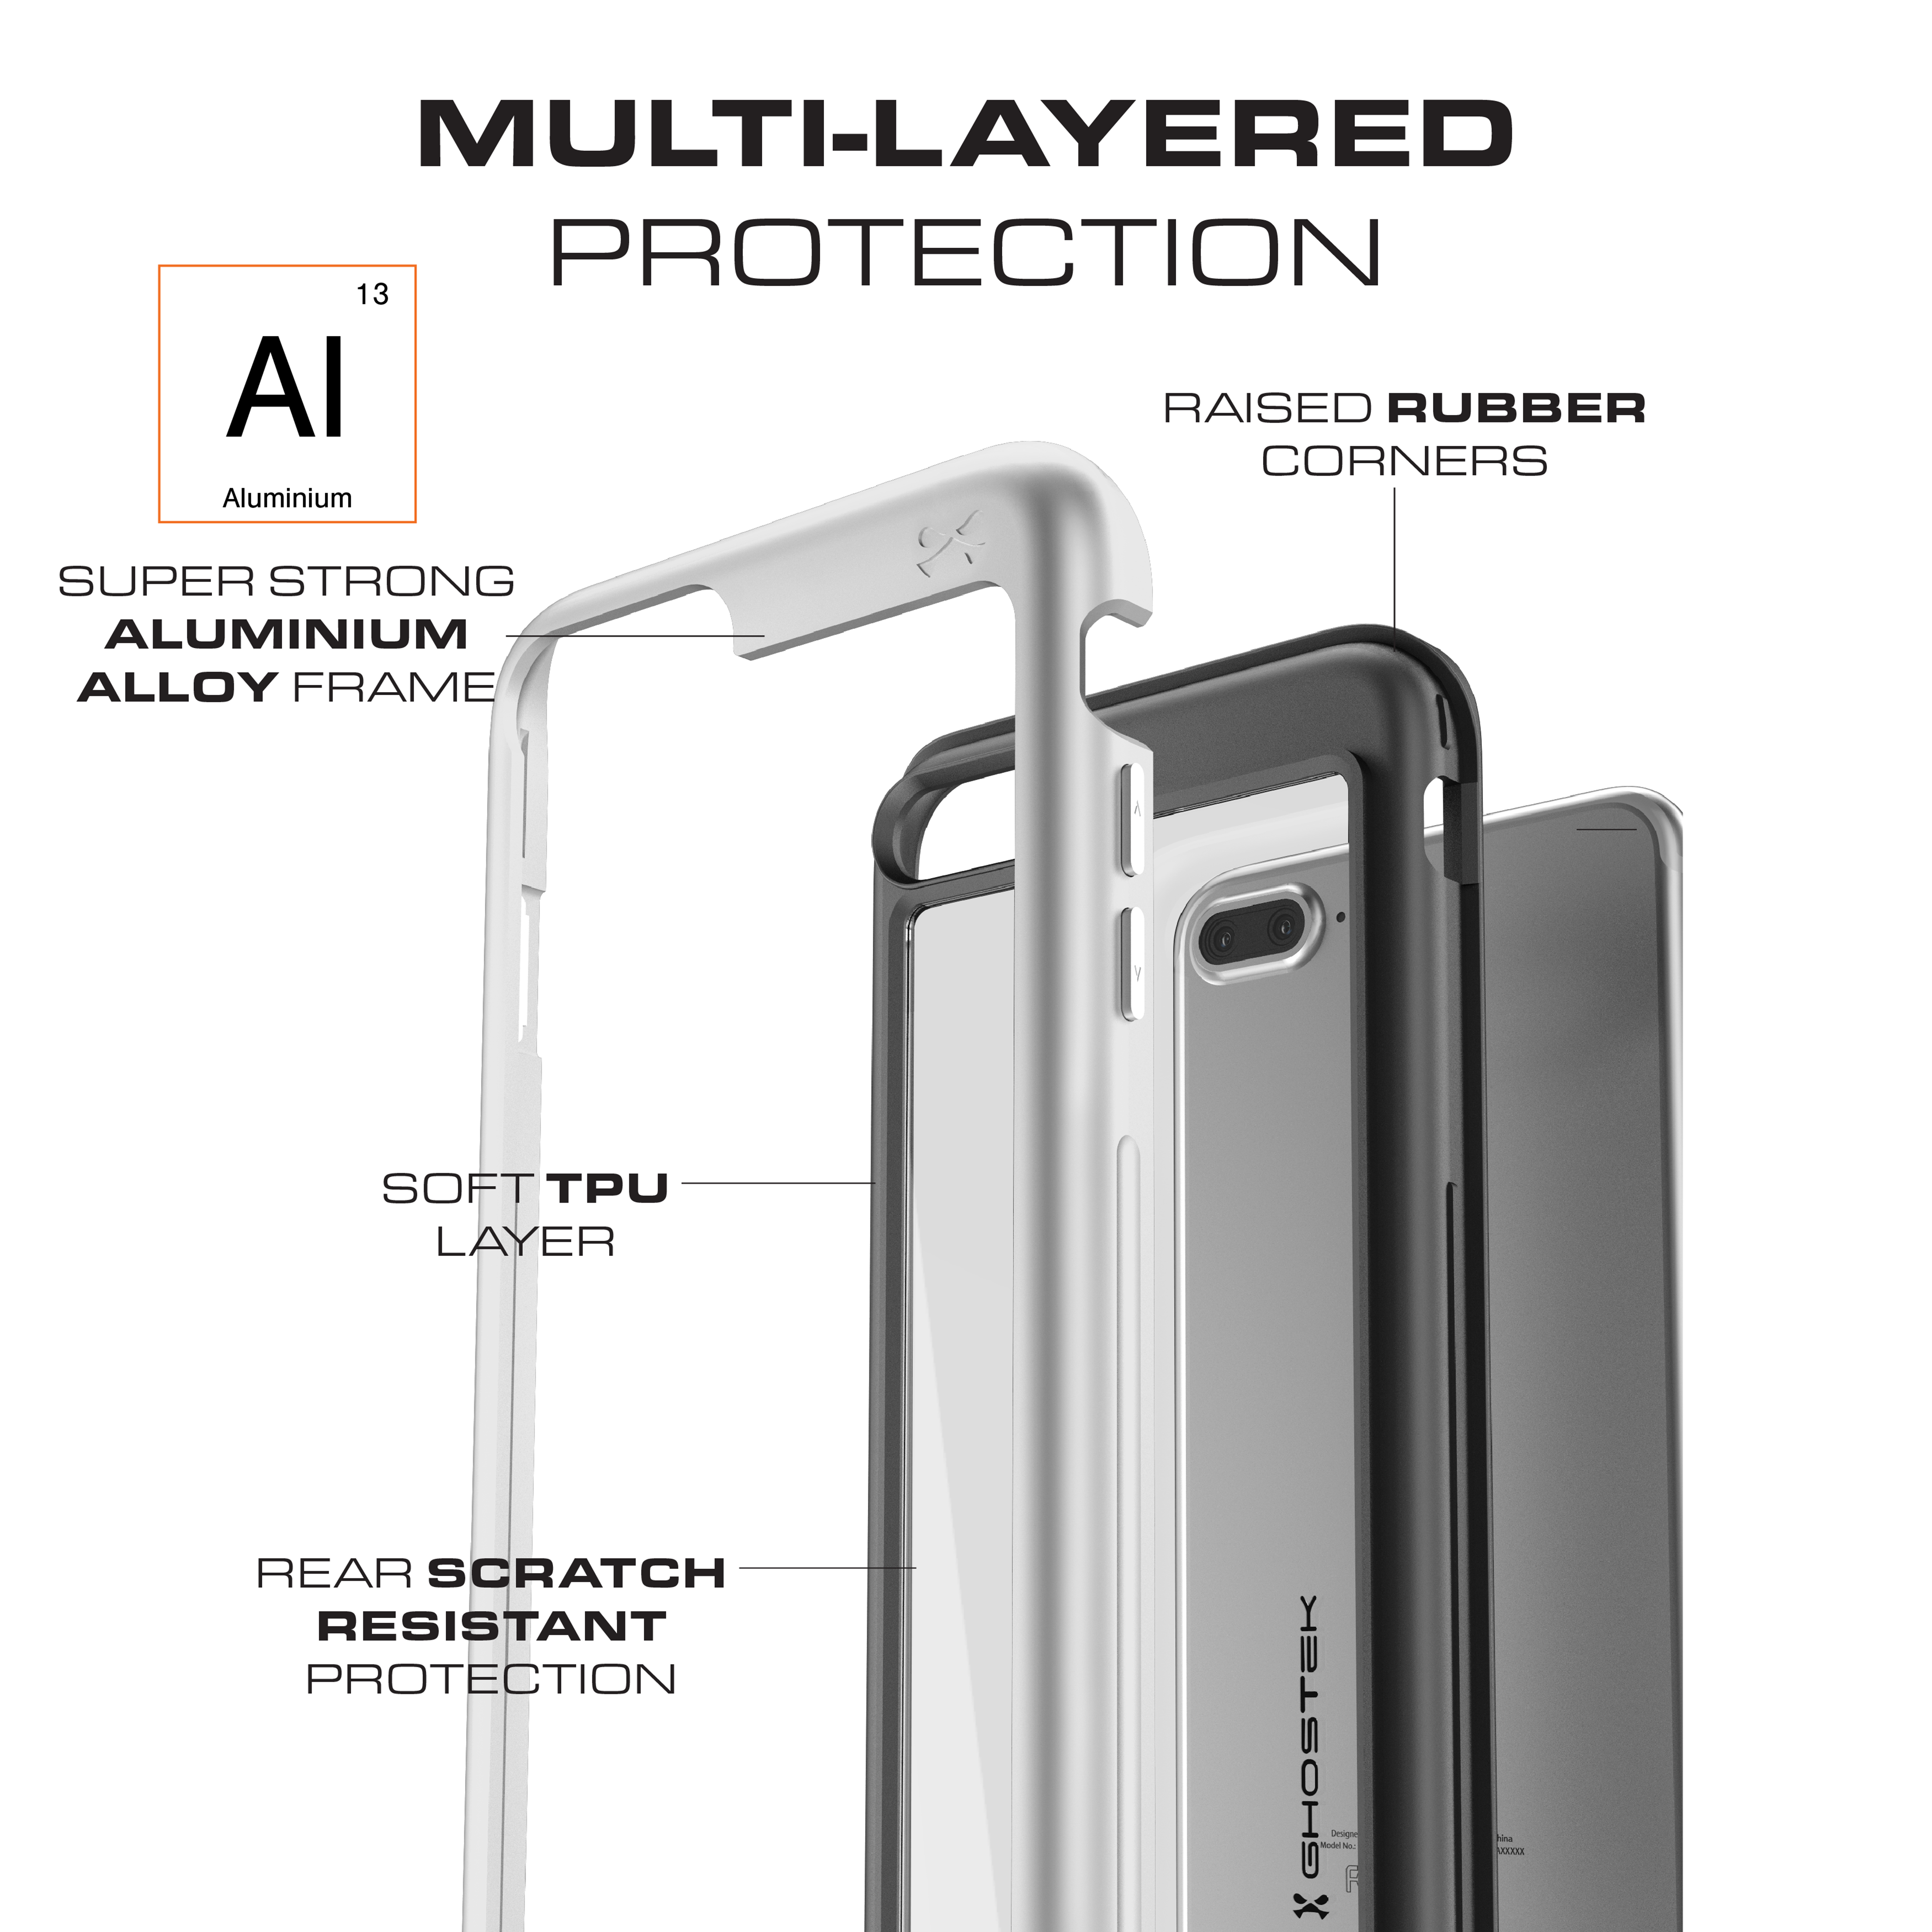 iPhone 7+ Plus Waterproof Case, Ghostek® Atomic Series for Apple iPhone 7+ Plus | Underwater | Shockproof | Dirt-proof | Snow-proof | Aluminum Frame | Adventure Ready | Ultra Fit | Swimming (Silver)